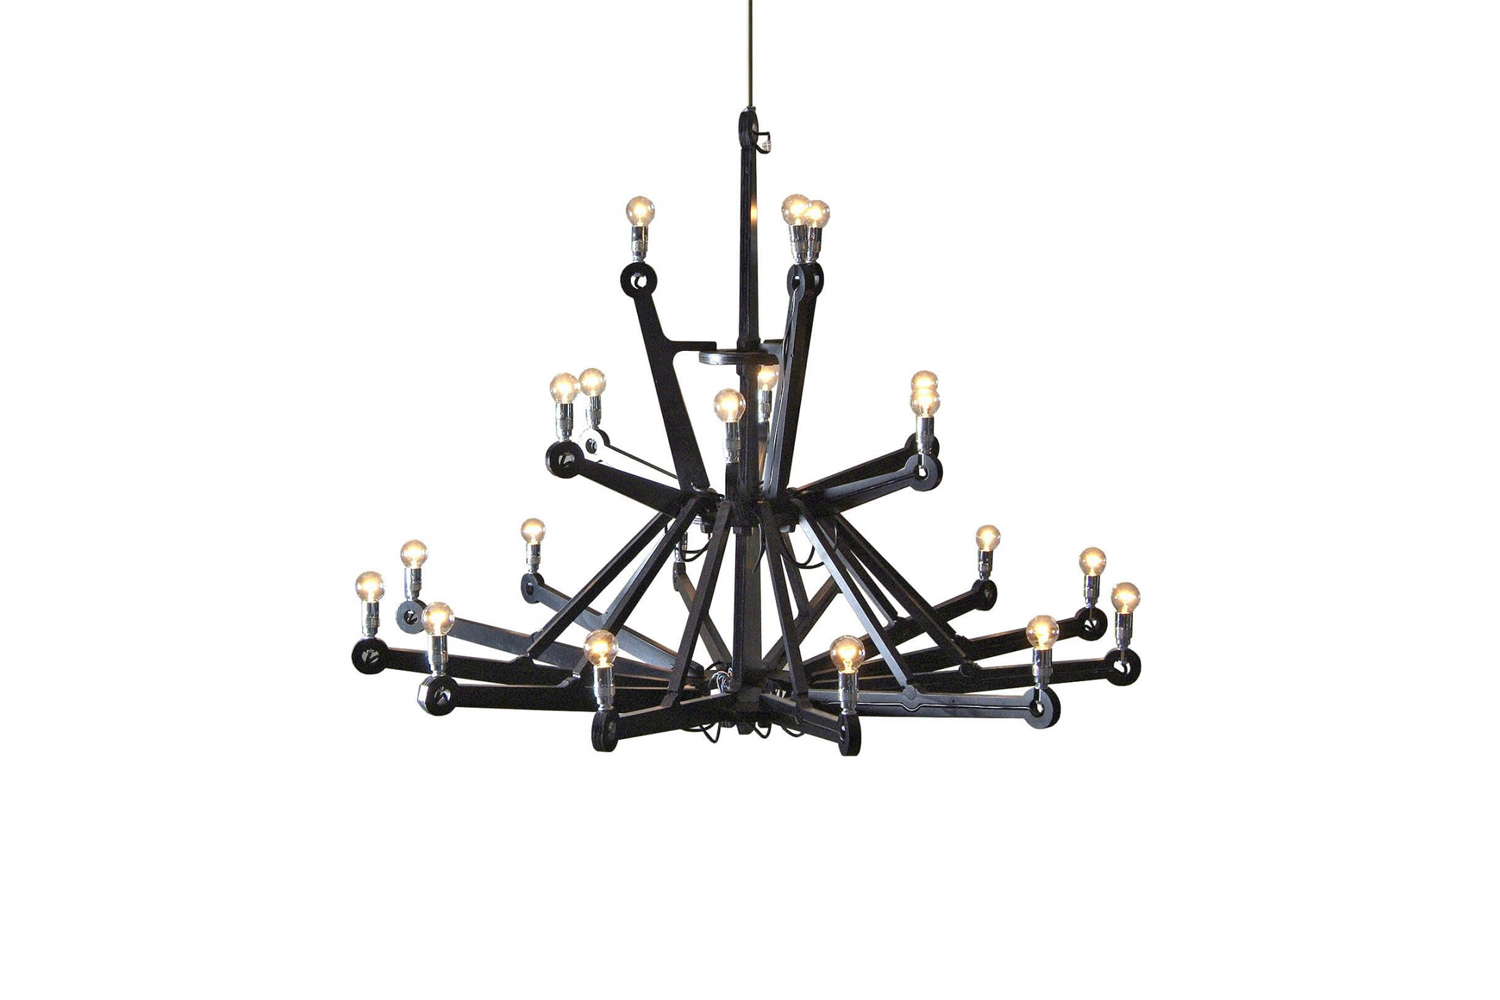 piet hein eek&#8\2\17;s plywood chandelier is available in black (shown), b 14